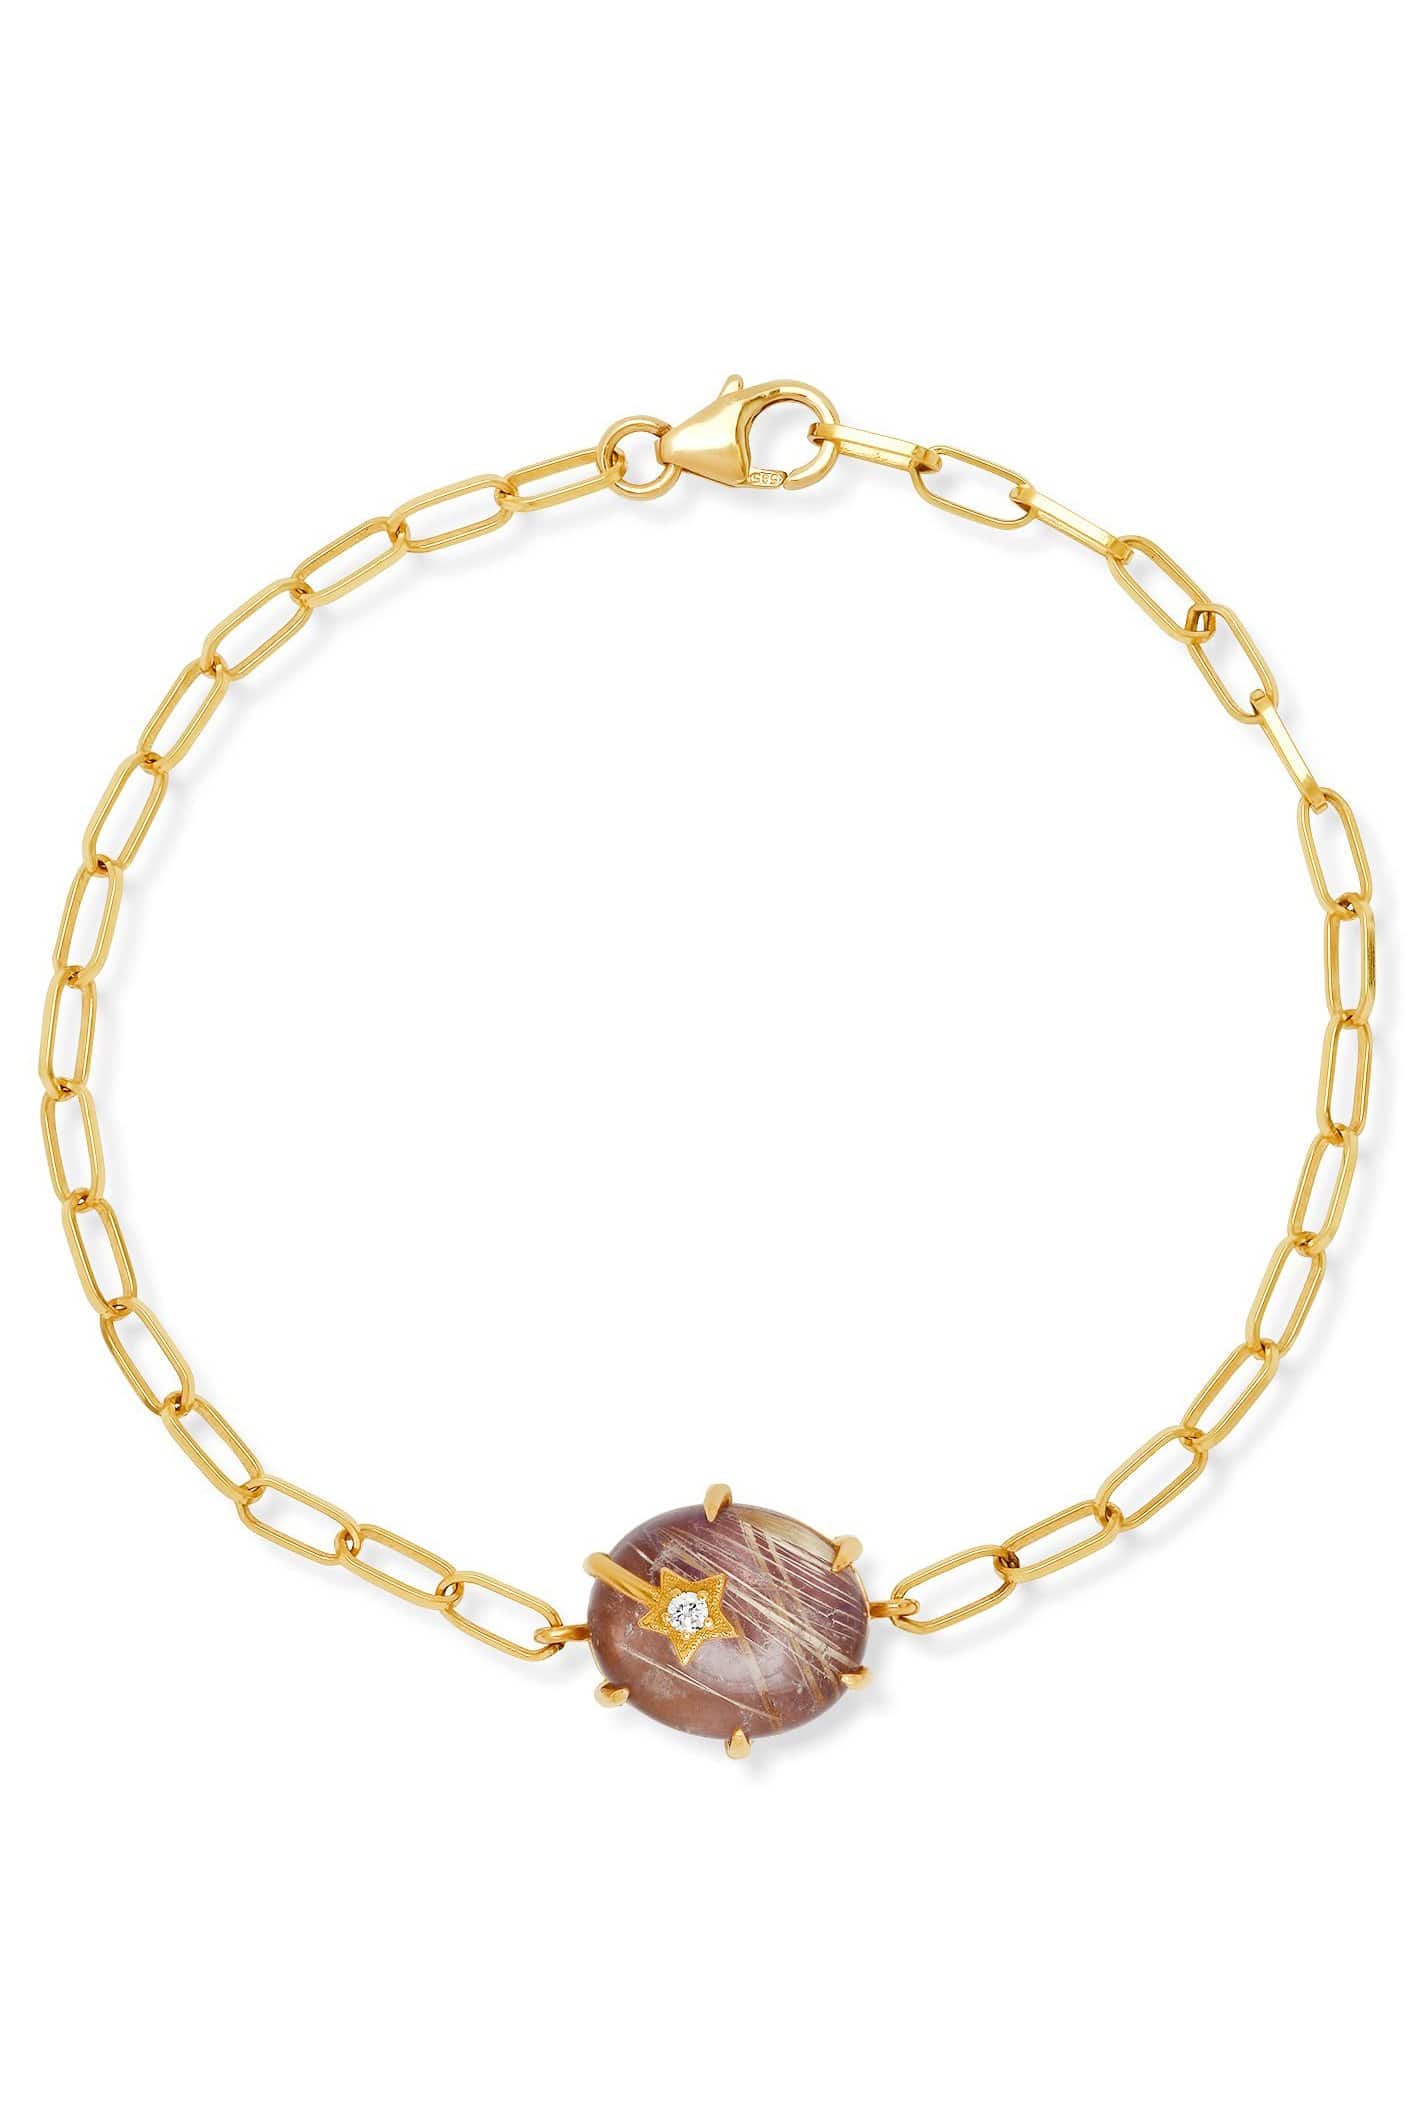 ANDREA FOHRMAN-Mini Galaxy Chain Bracelet-YELLOW GOLD